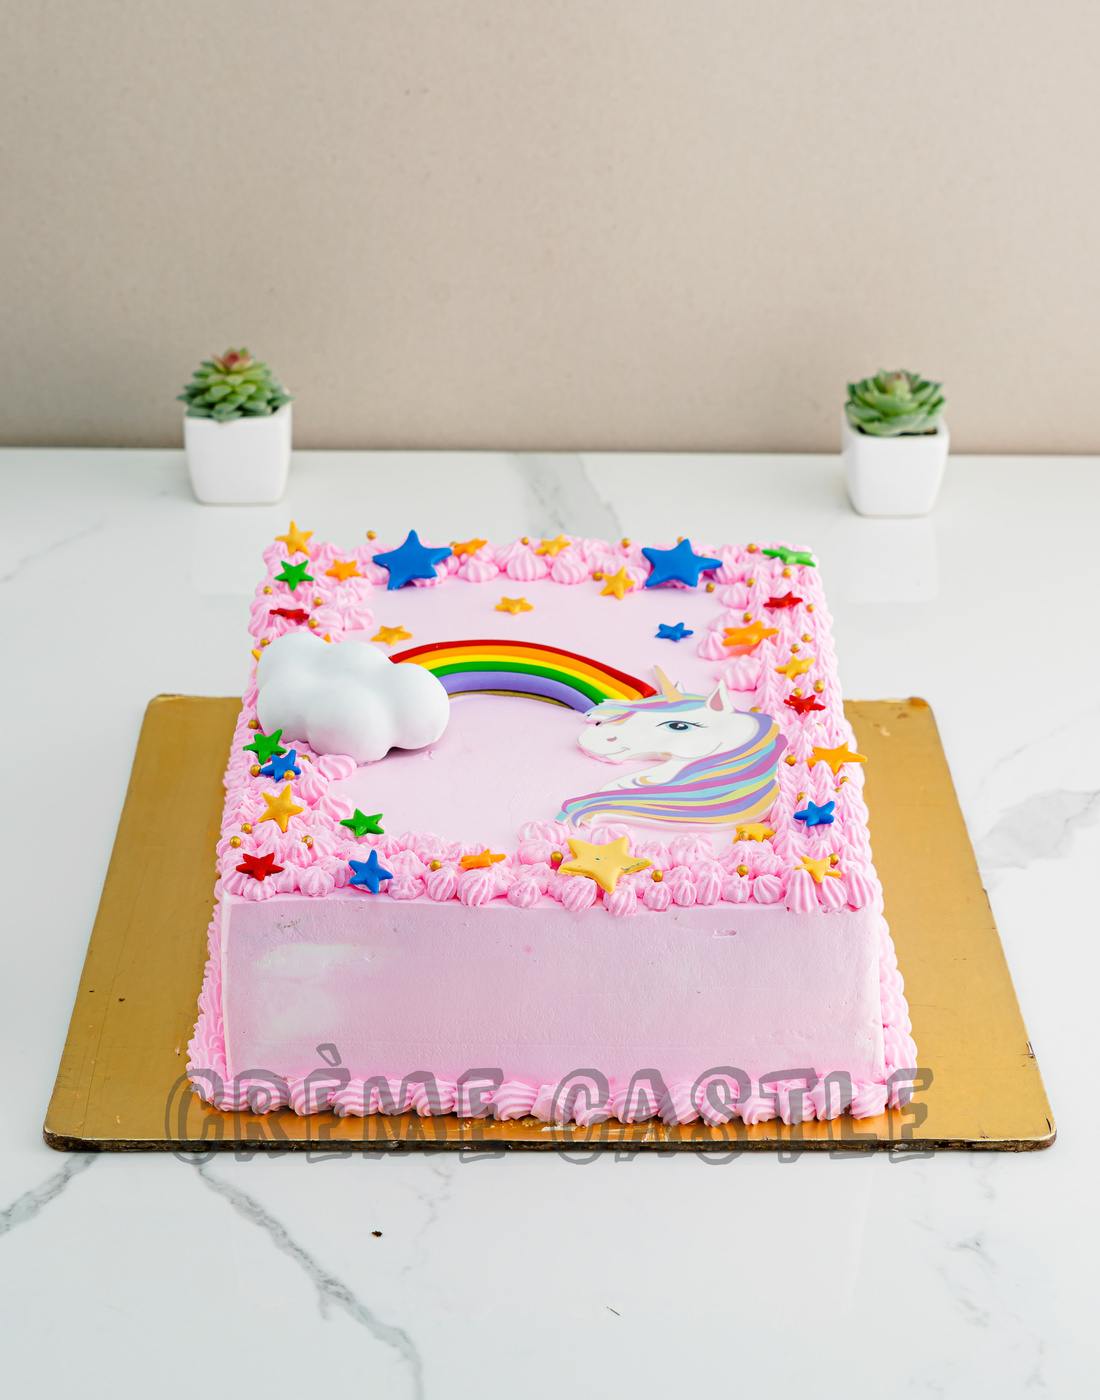 3 kg two tier cake | wedding cake | Engagement cake - YouTube